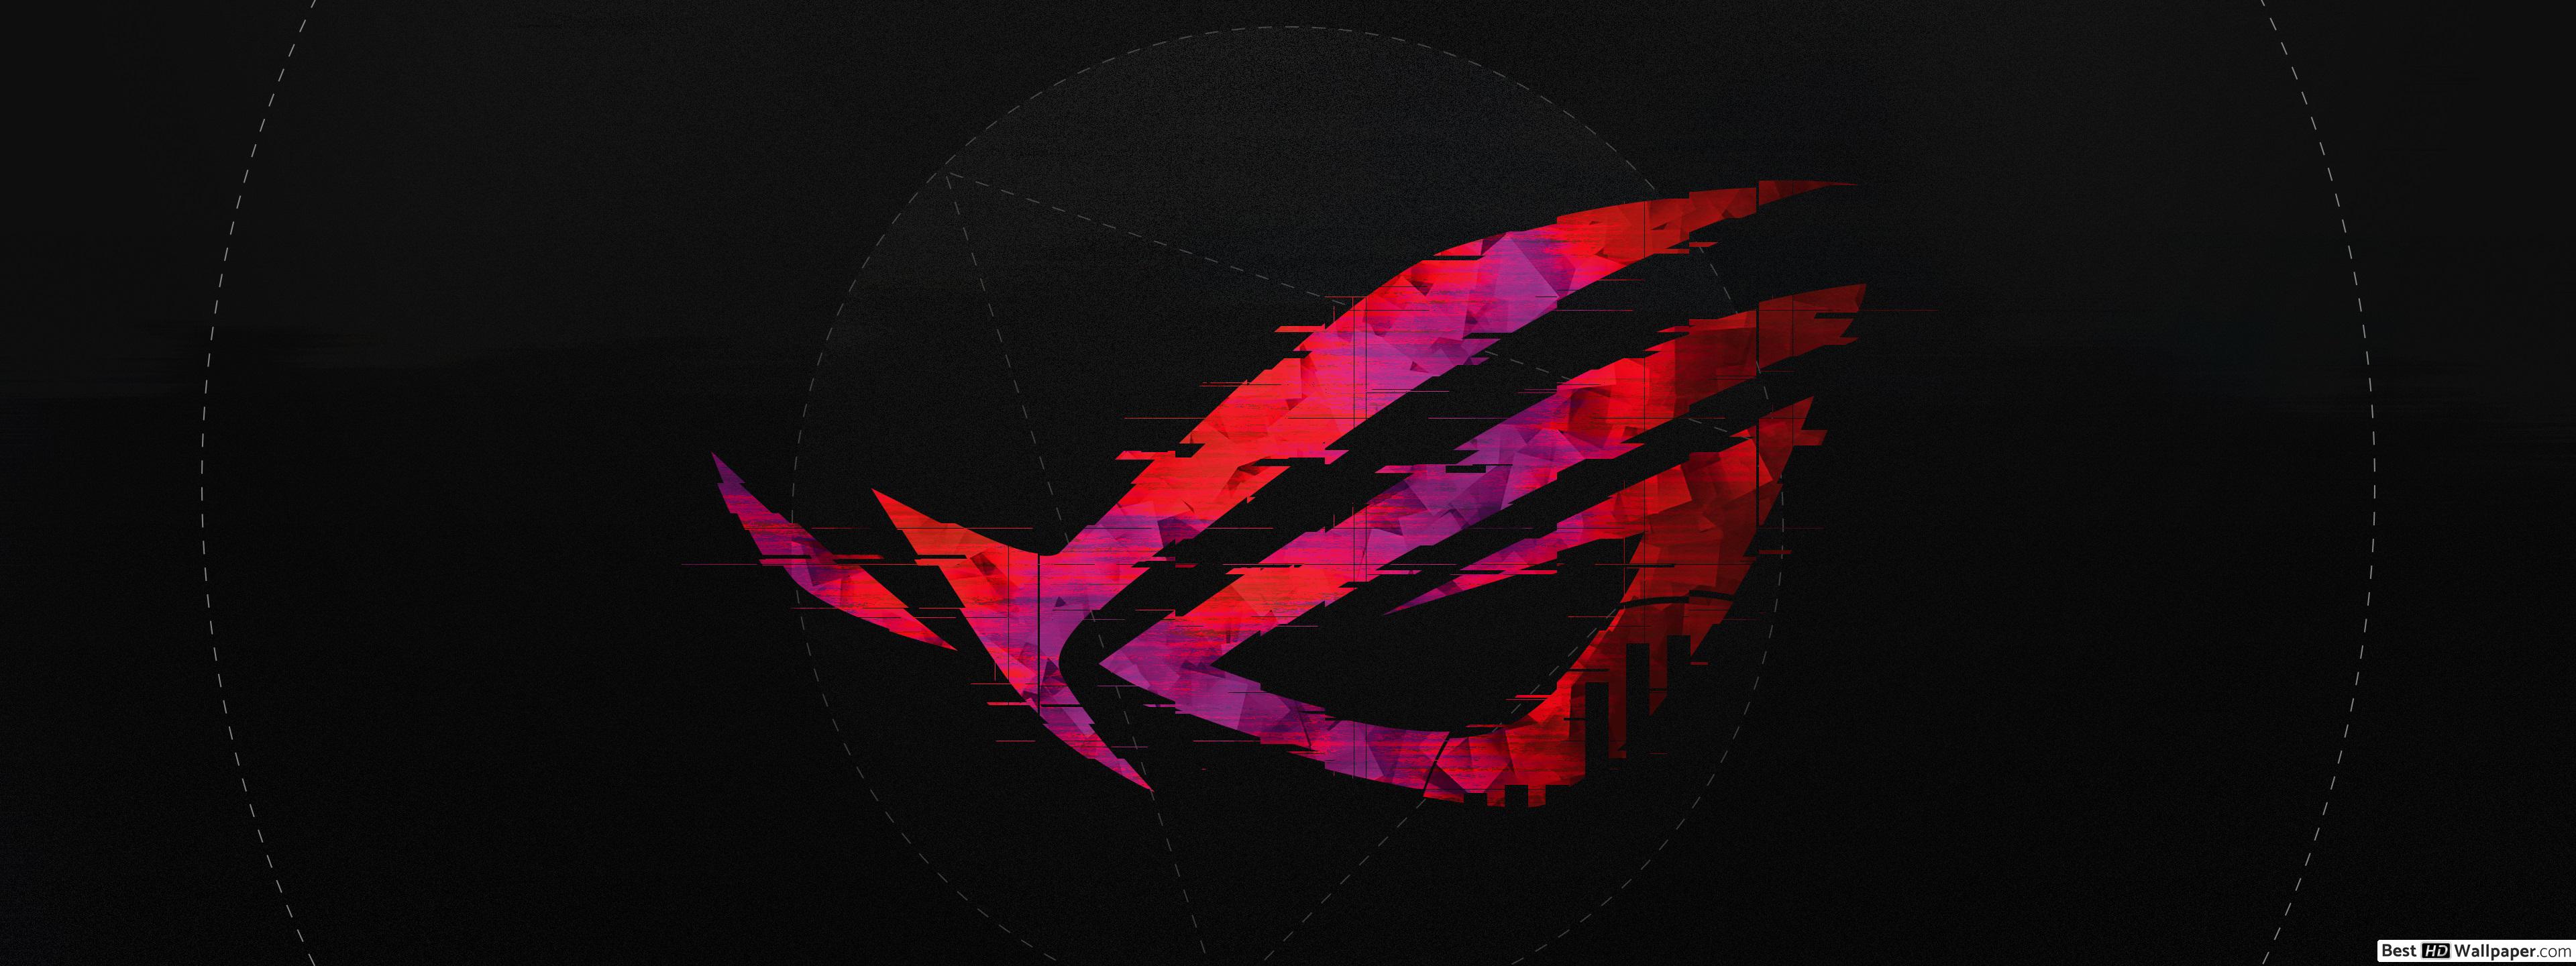 Asus ROG [Republic of Gamers] Dark Glitchy Red LOGO HD wallpaper download